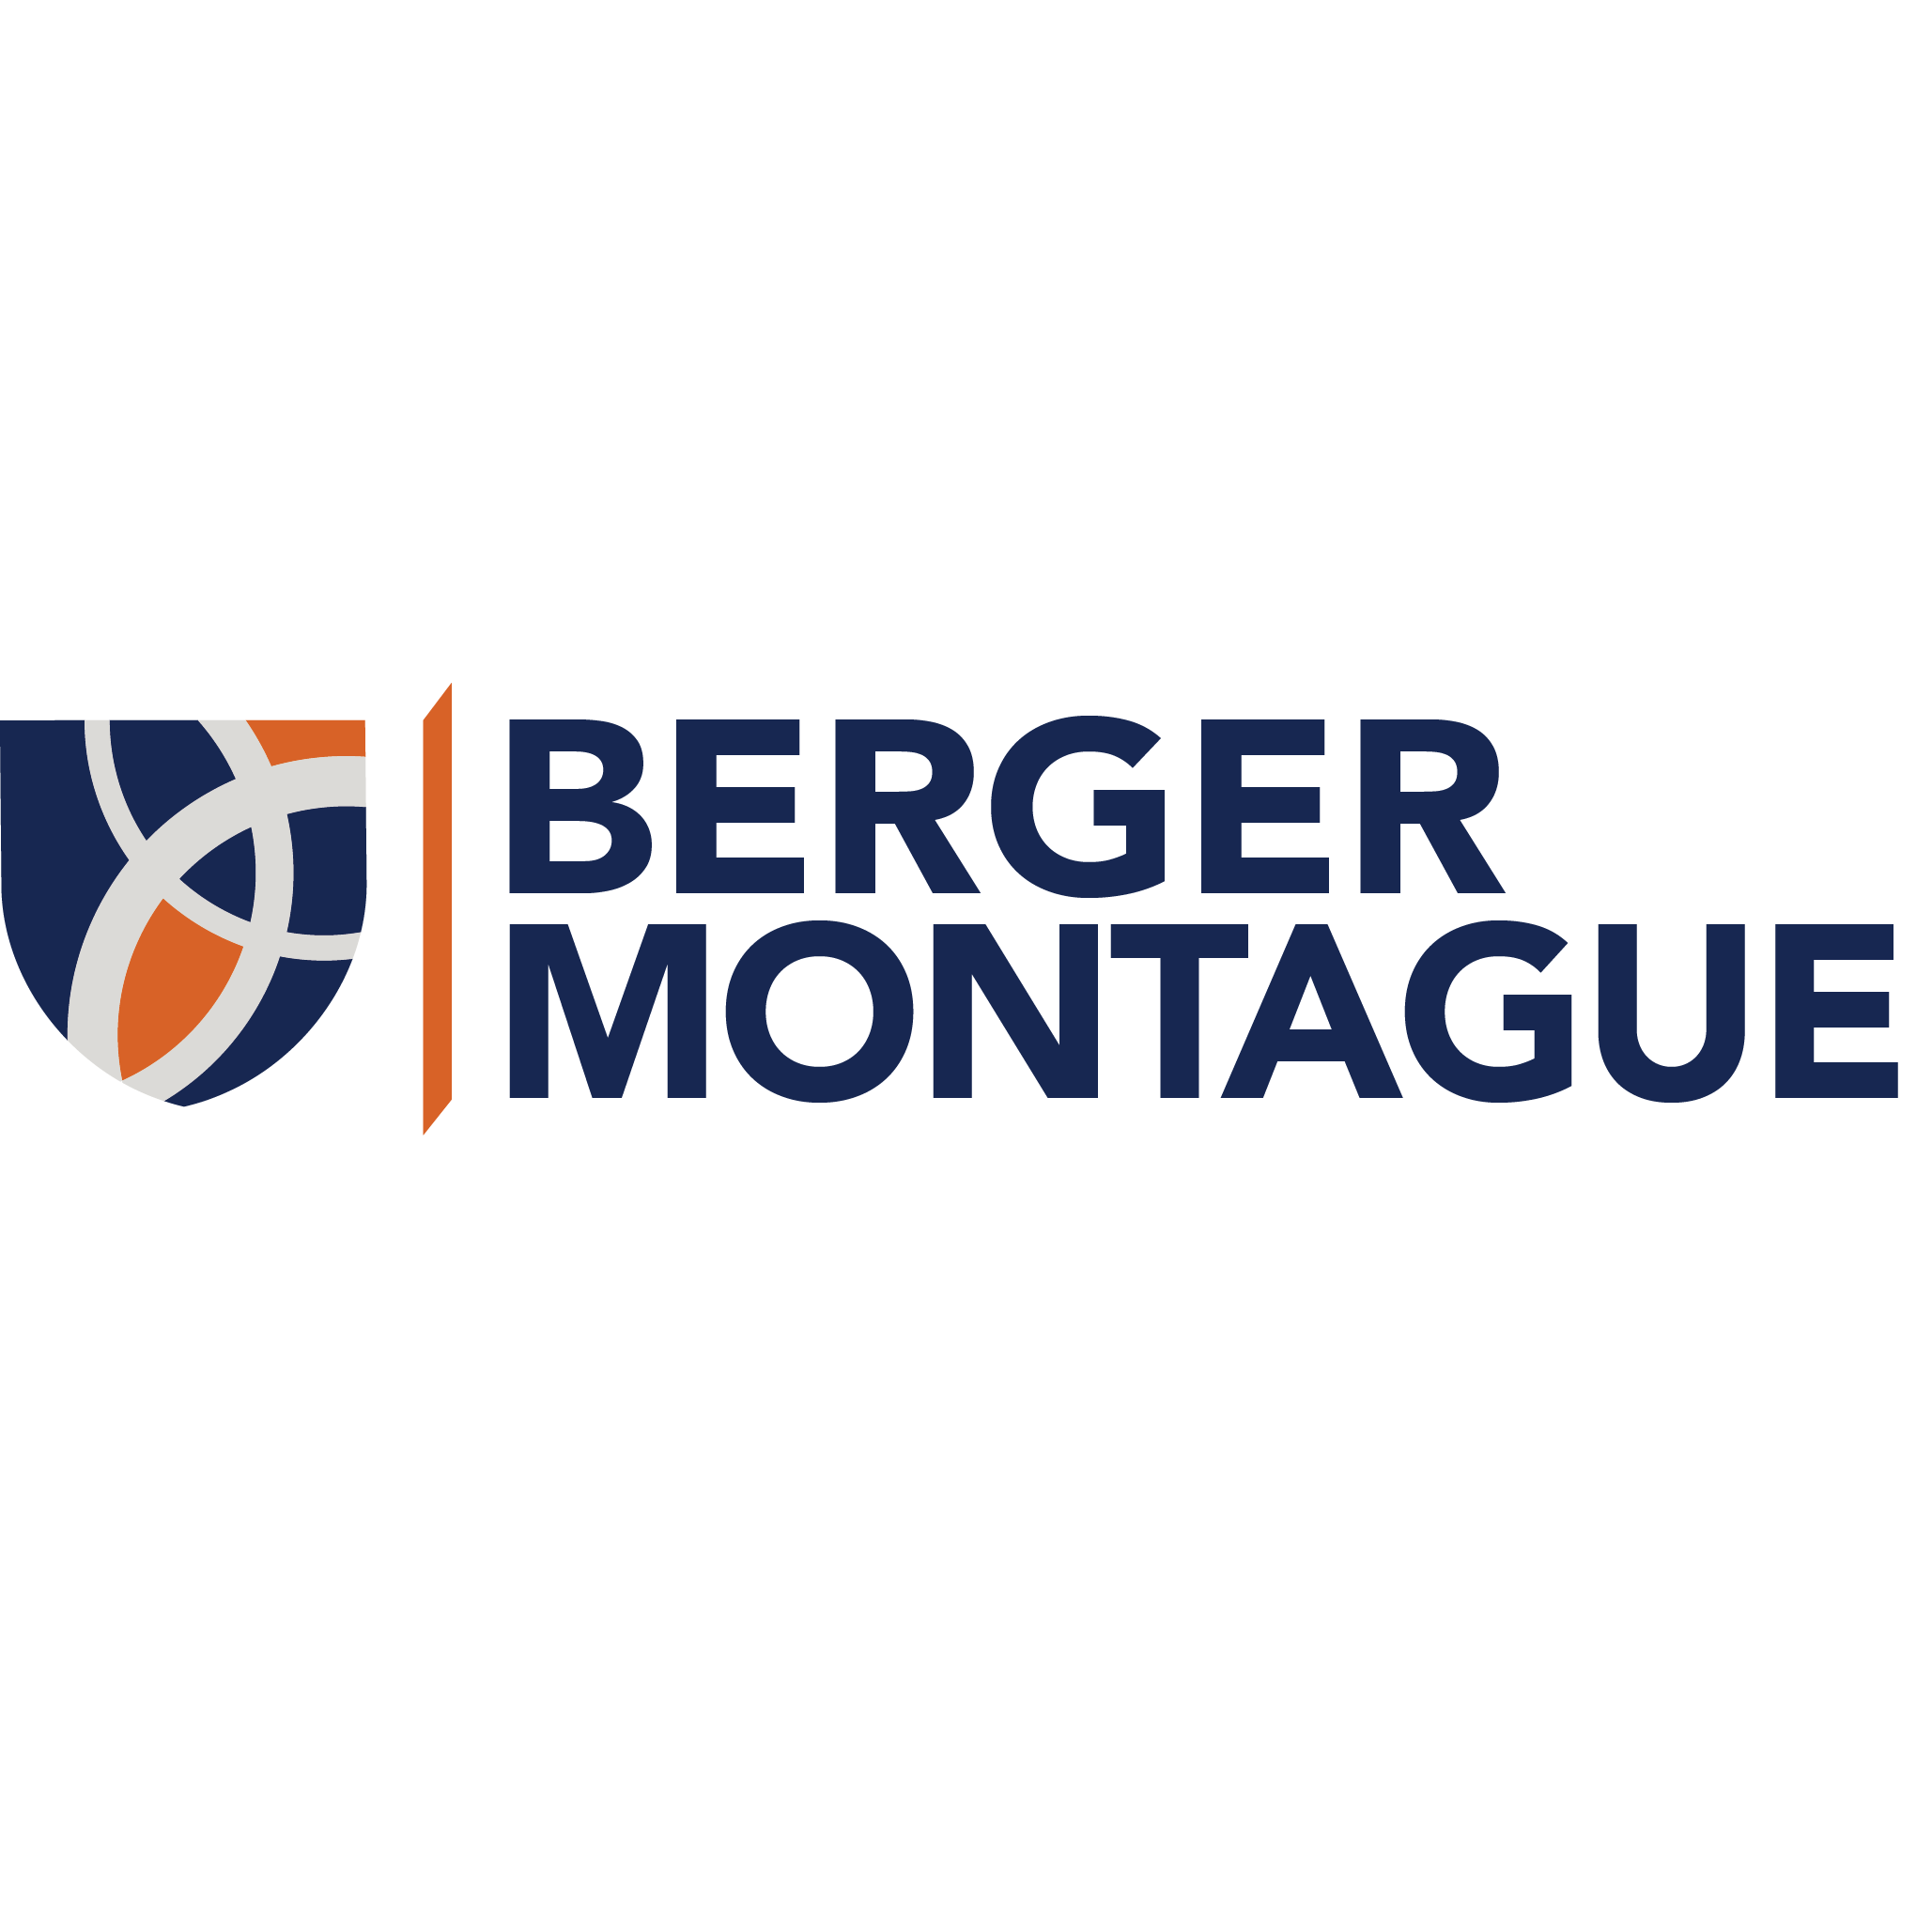 Berger Montague Logo